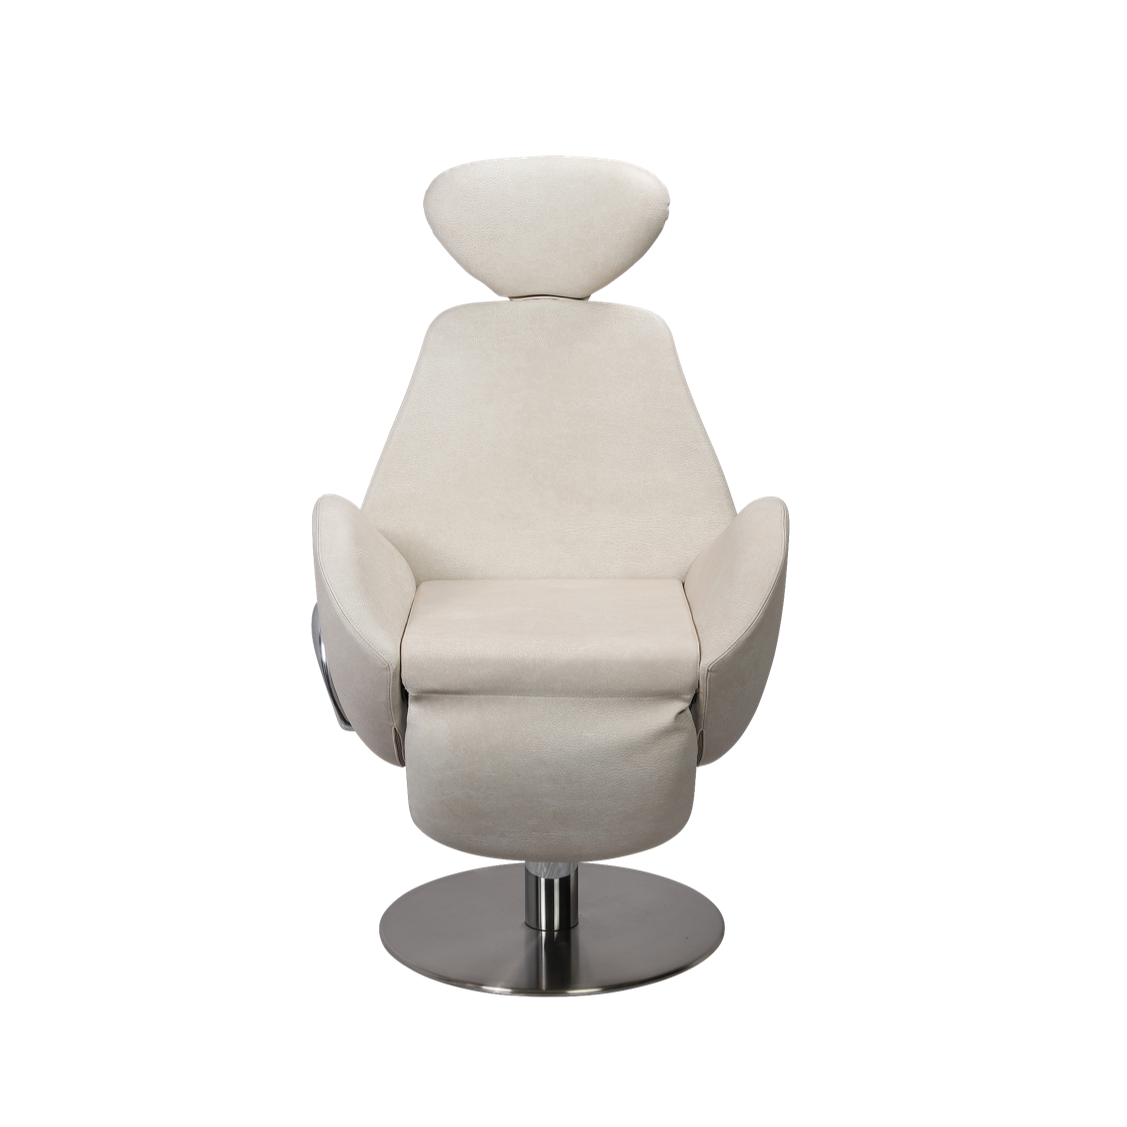 Graeson 1820 All Purpose Chair - Garfield Commercial Enterprises Salon Equipment Spa Furniture Barber Chair Luxury